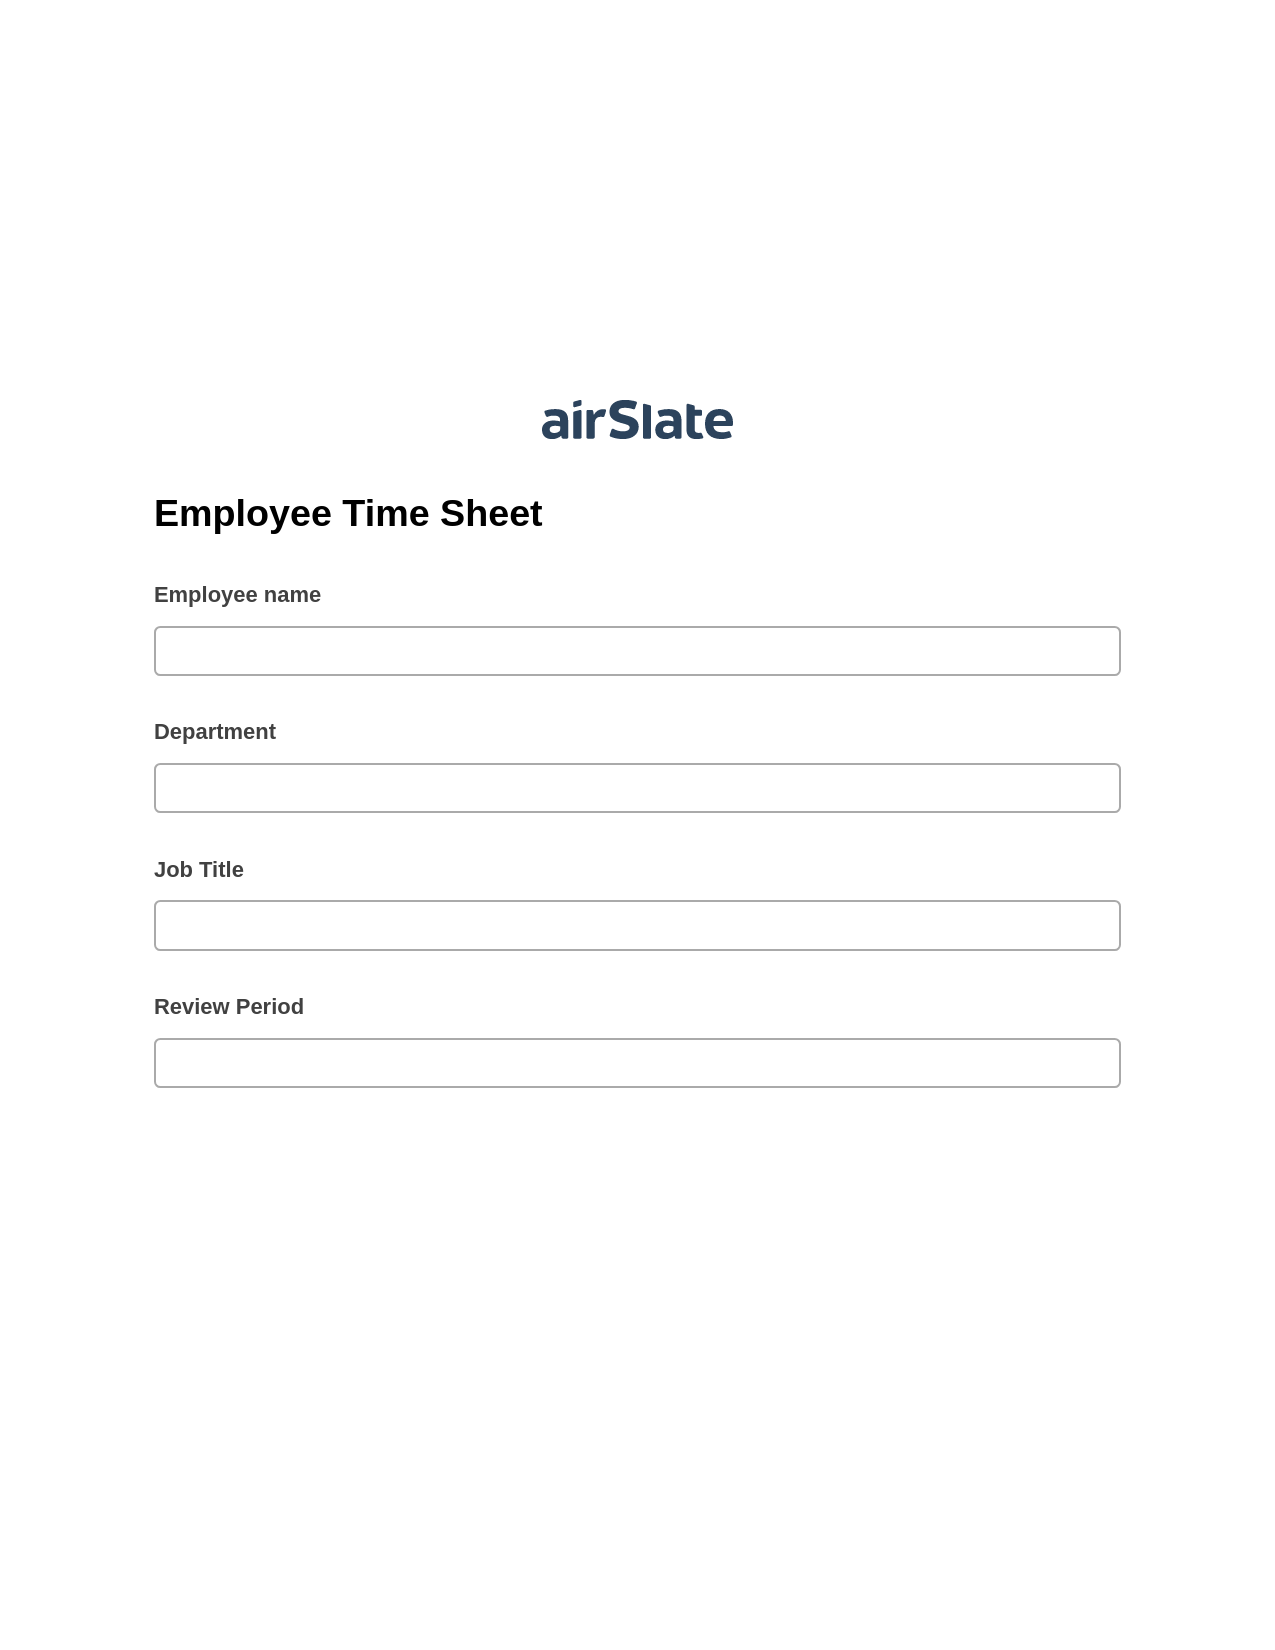 Multirole Employee Time Sheet Pre-fill from Smartsheet Bot, Revoke Access Bot, Slack Two-Way Binding Bot